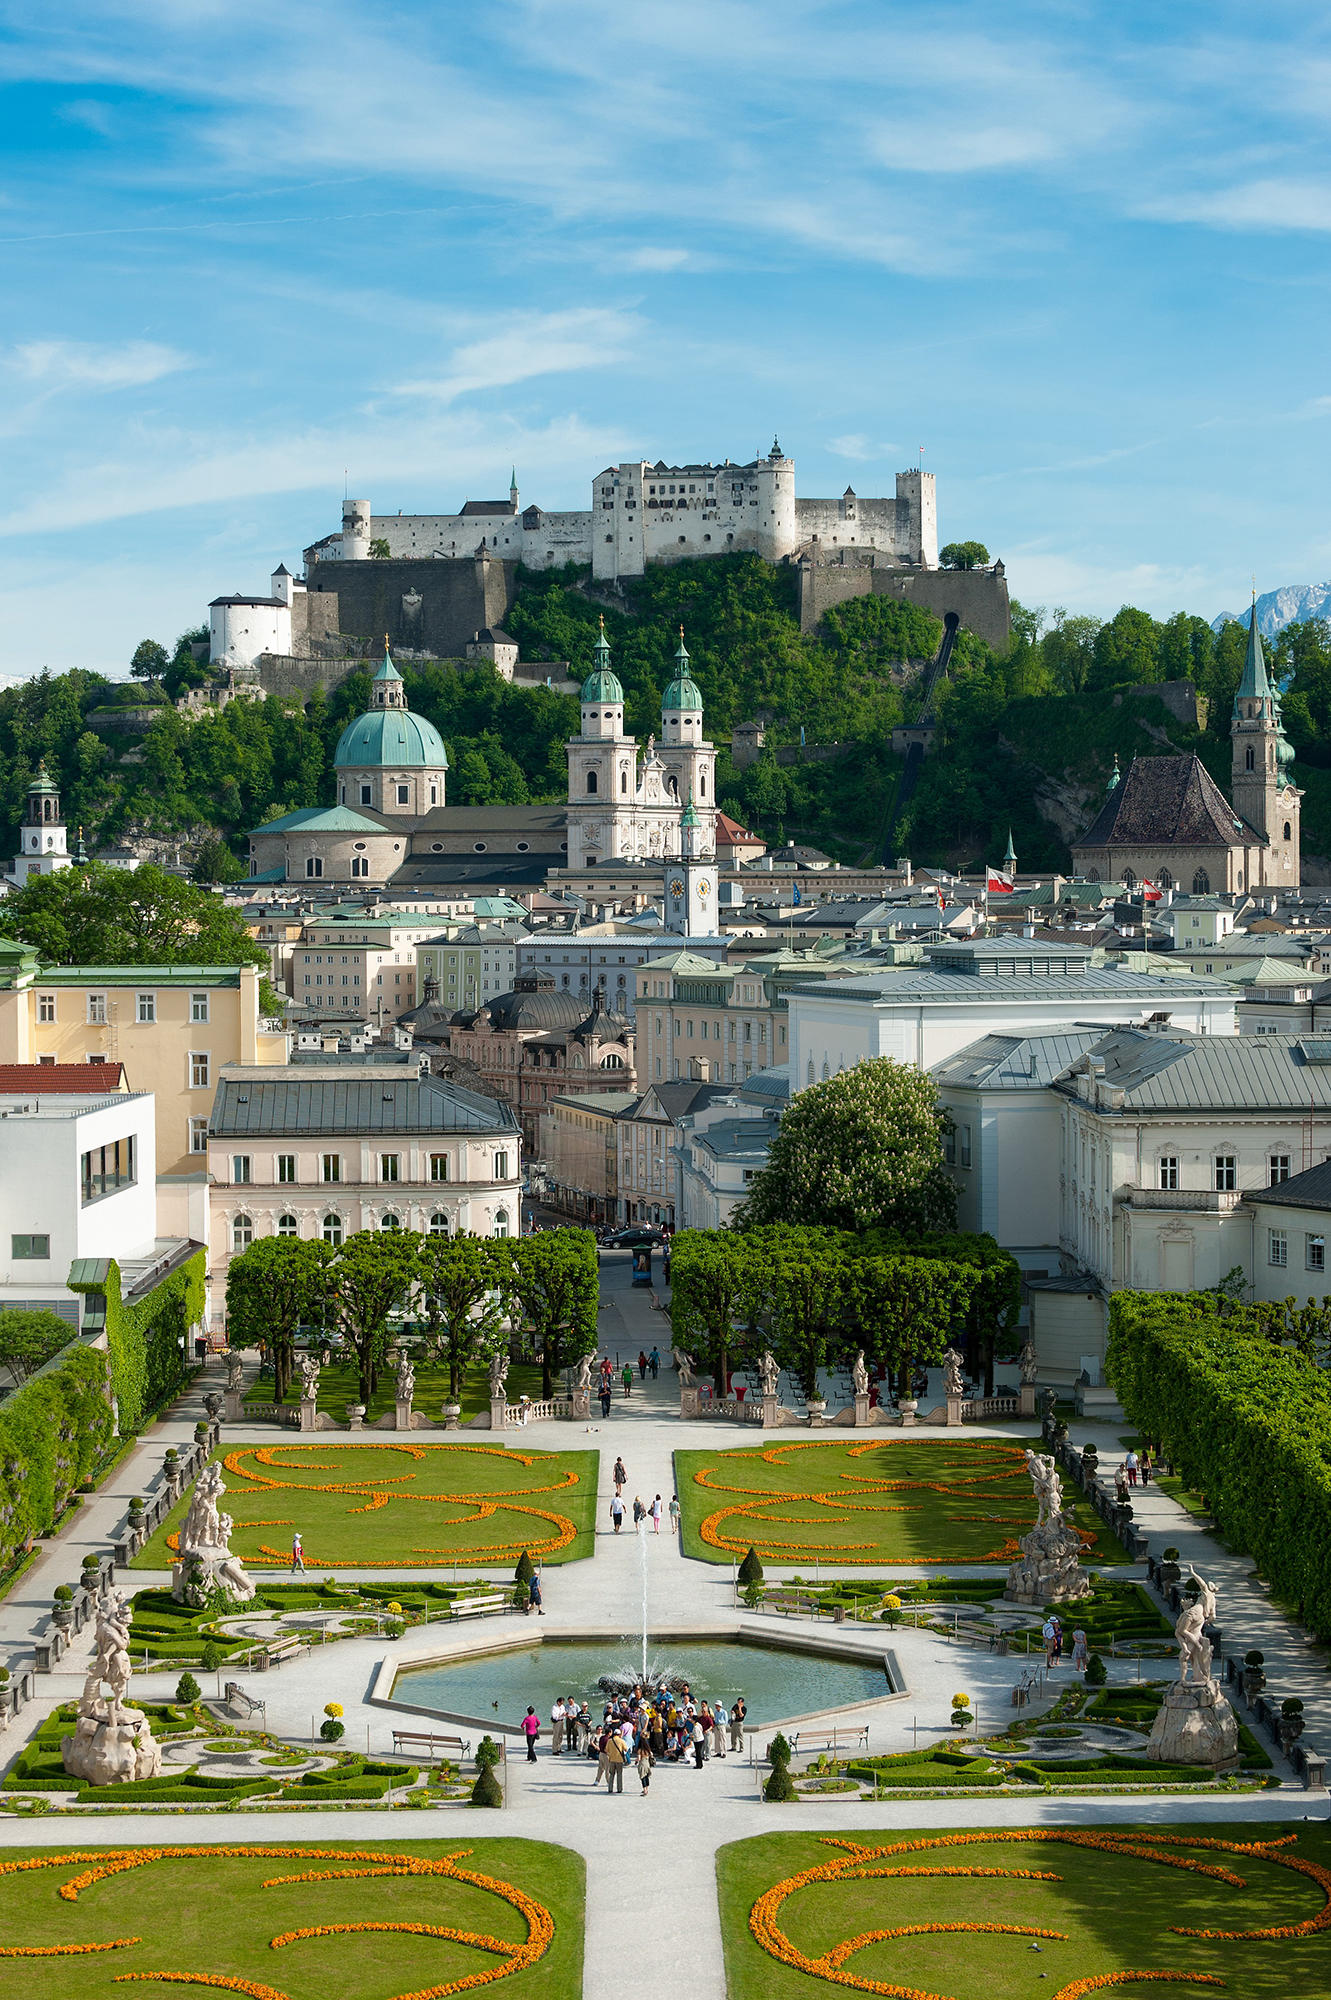 Salzburg Convention Bureau